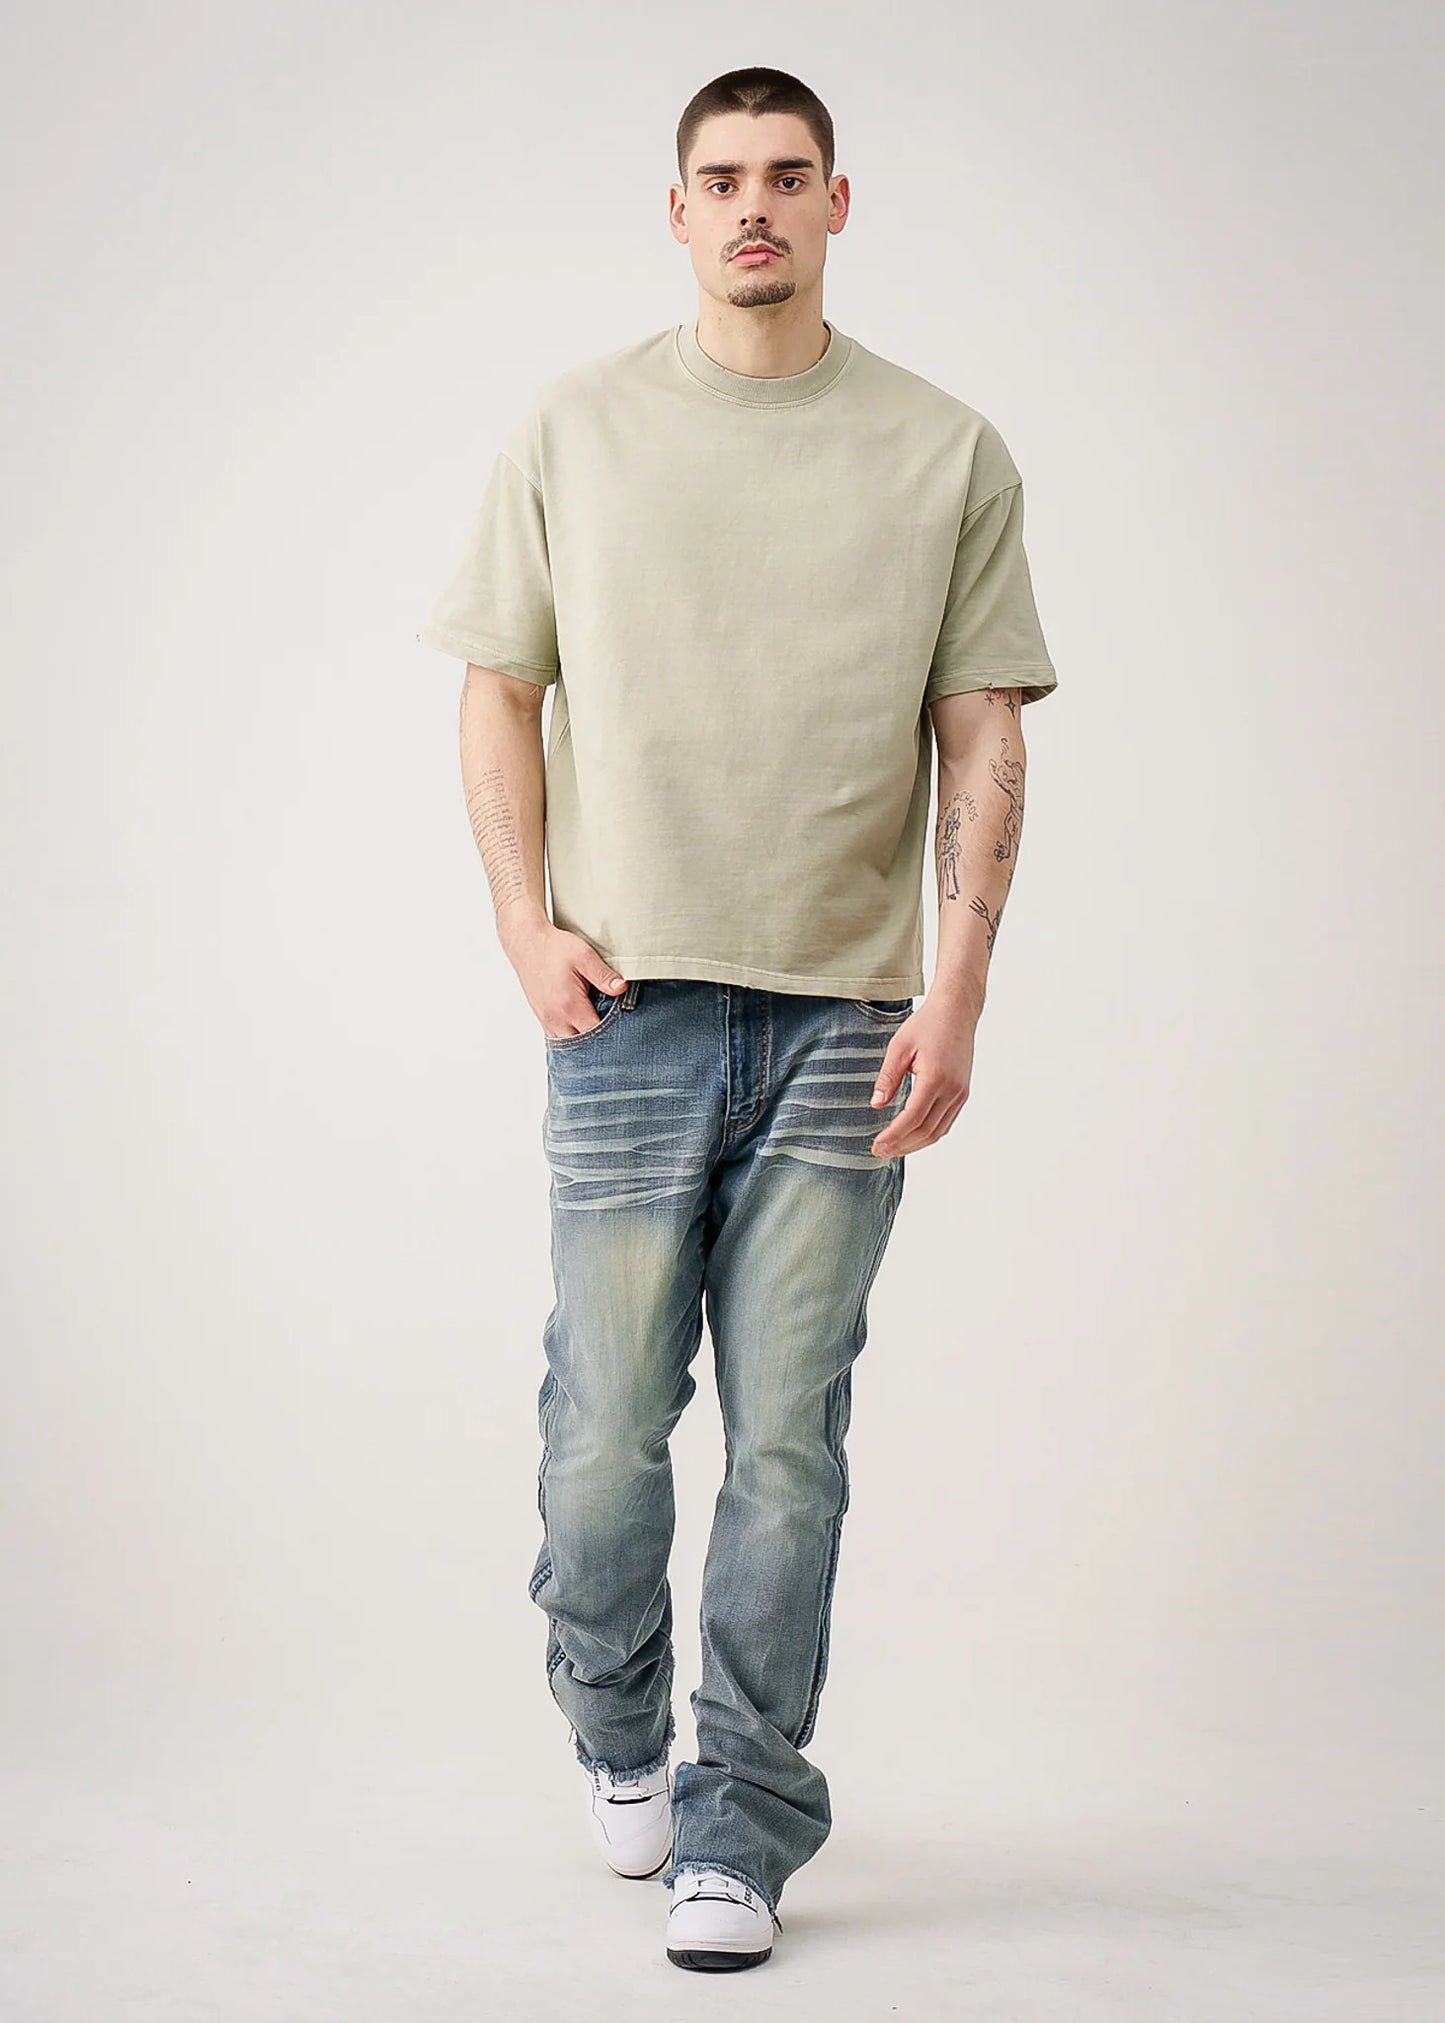 Khaki 10 oz Oversized Garment Dye French Terry Distressed T-Shirt